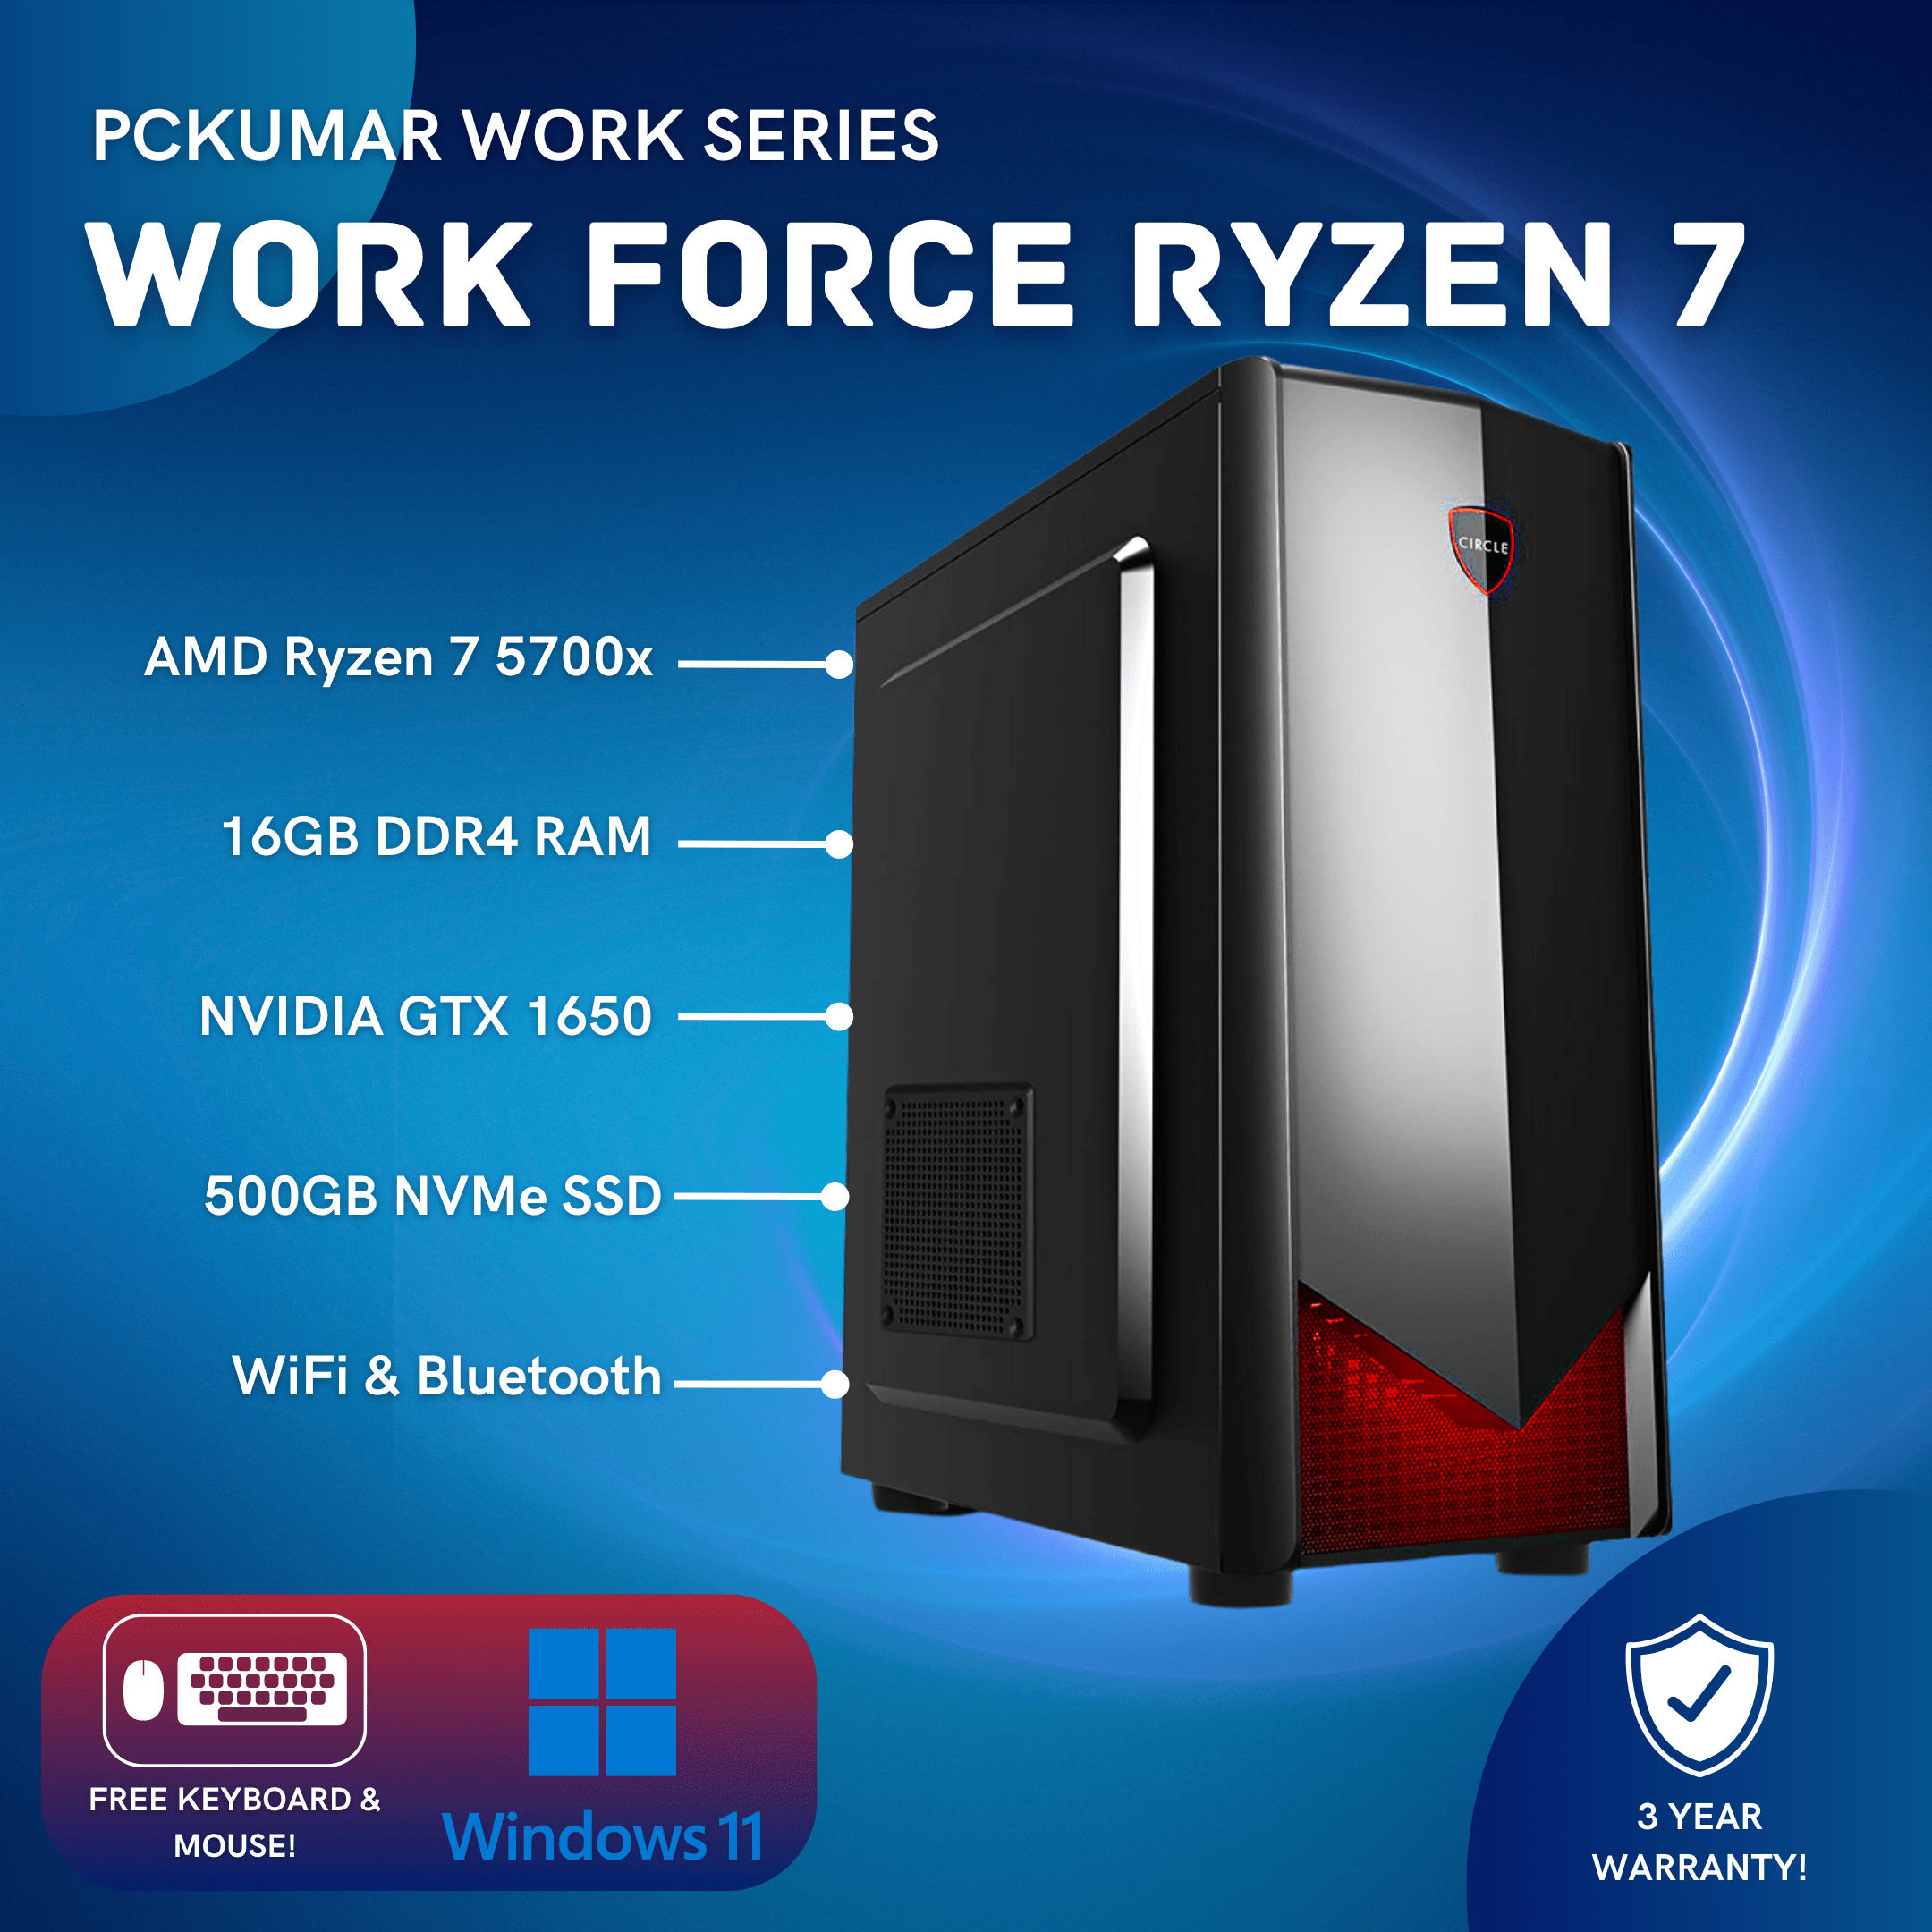 Work Force AMD Ryzen 7 PC for 58499/-